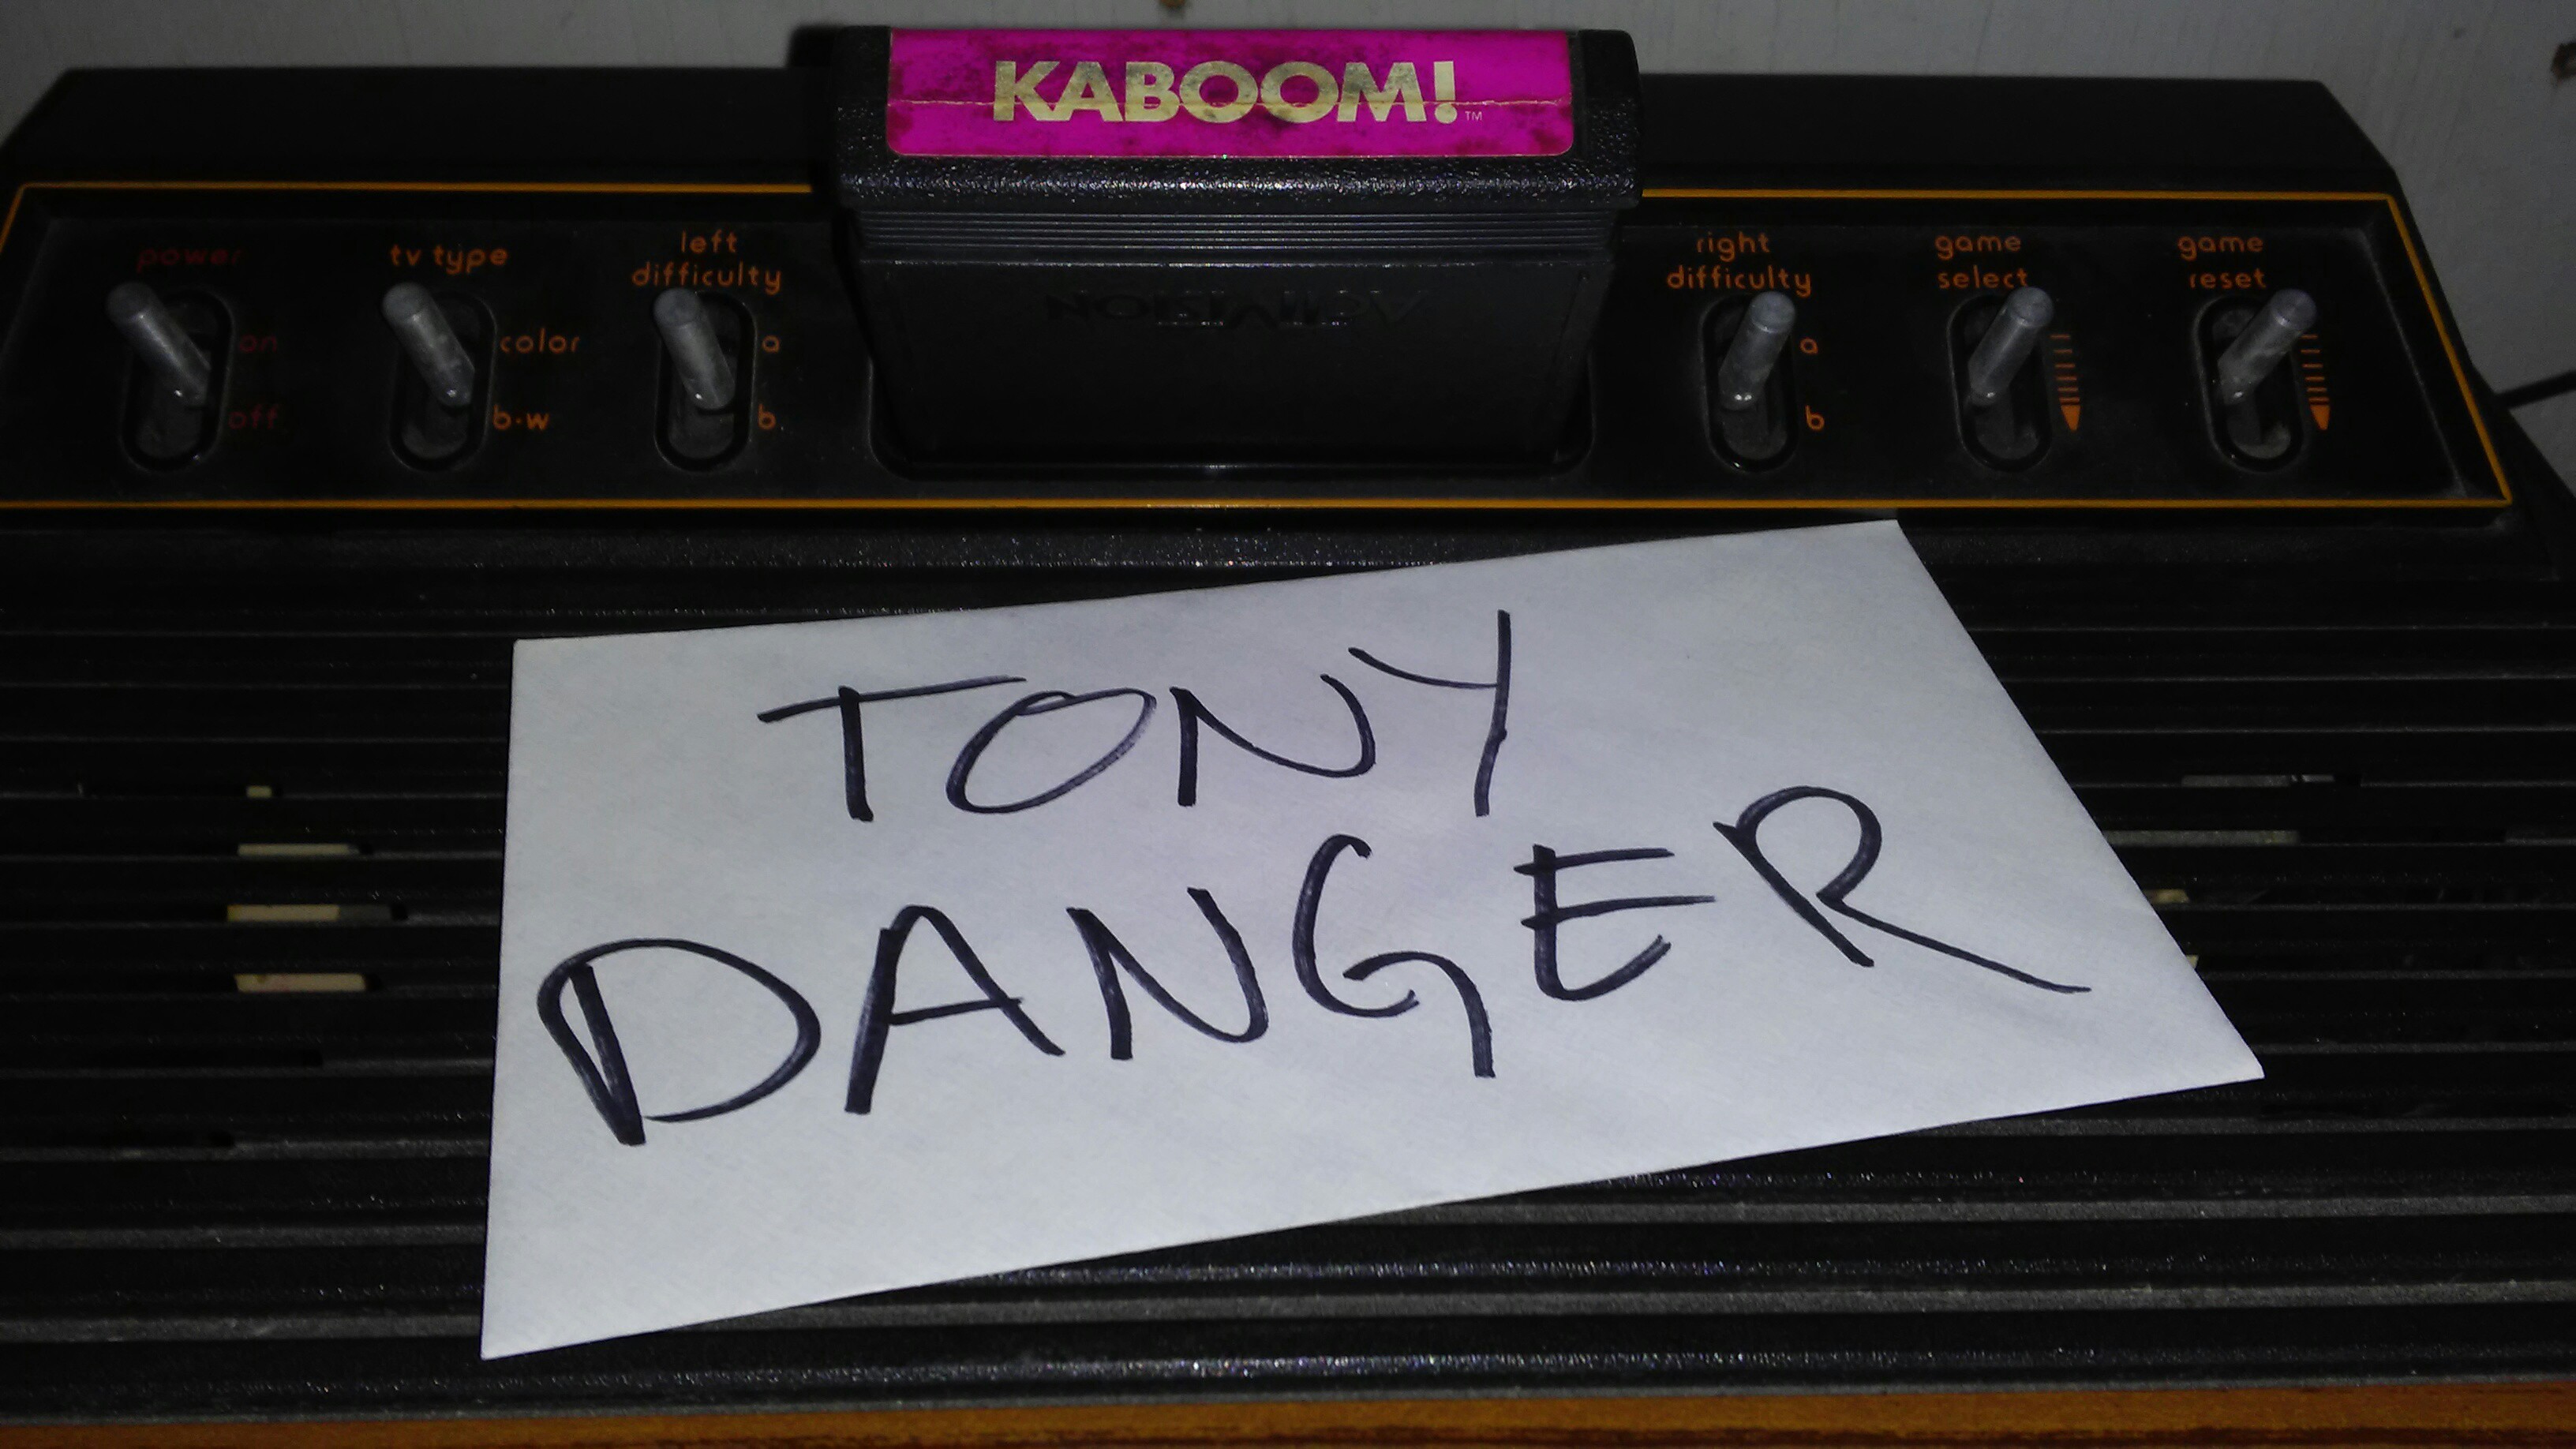 TonyDanger: Kaboom! (Atari 2600 Expert/A) 2,109 points on 2017-01-04 18:38:37